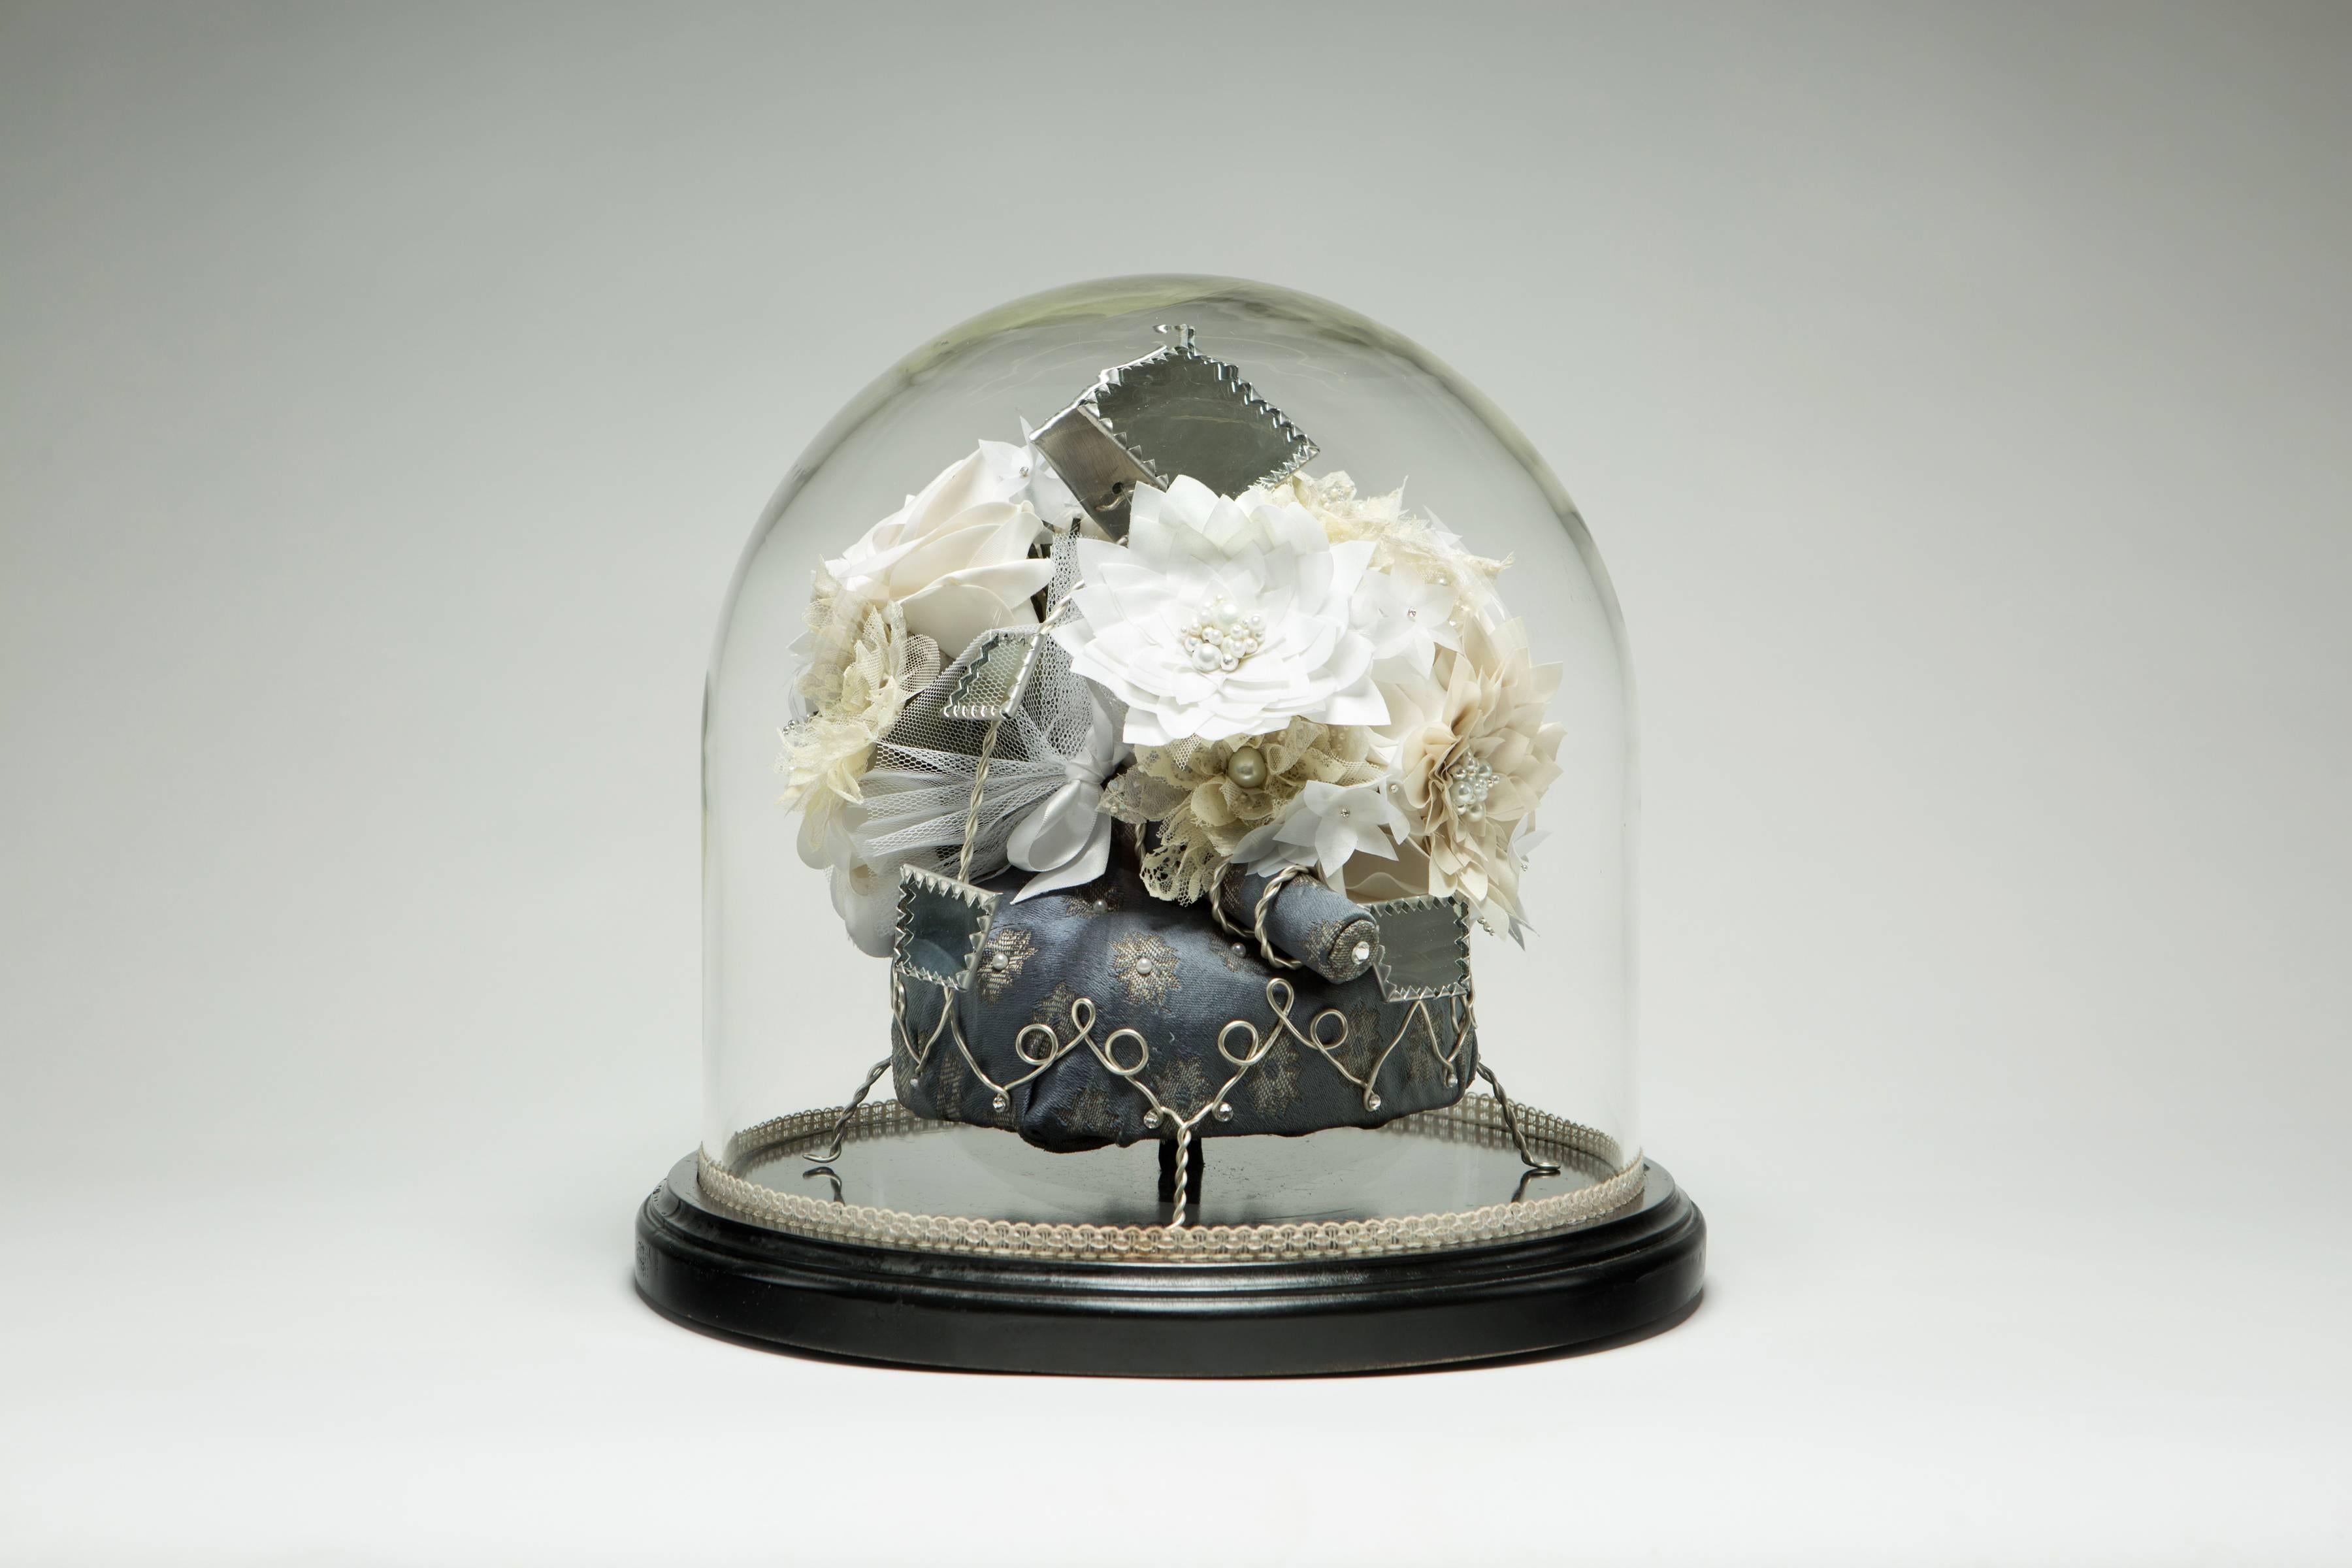 Globe de Mariée - Double bouquet - Mixed Media Art de Carlton Scott Sturgill